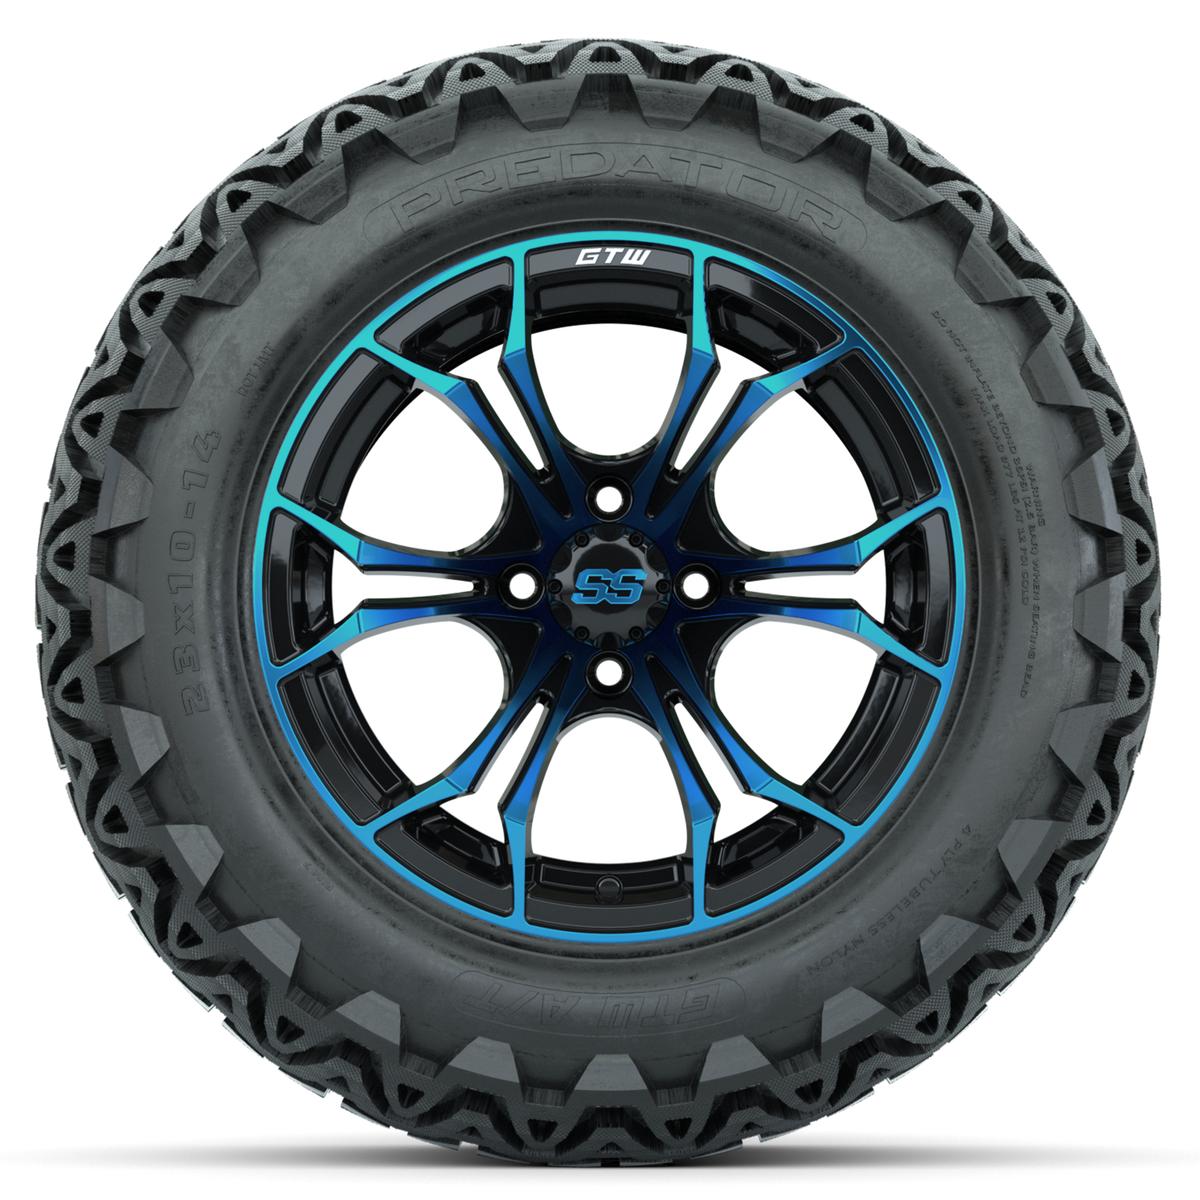 GTW Spyder Blue/Black 14 in Wheels with 23x10-14 GTW Predator All-Terrain Tires – Full Set